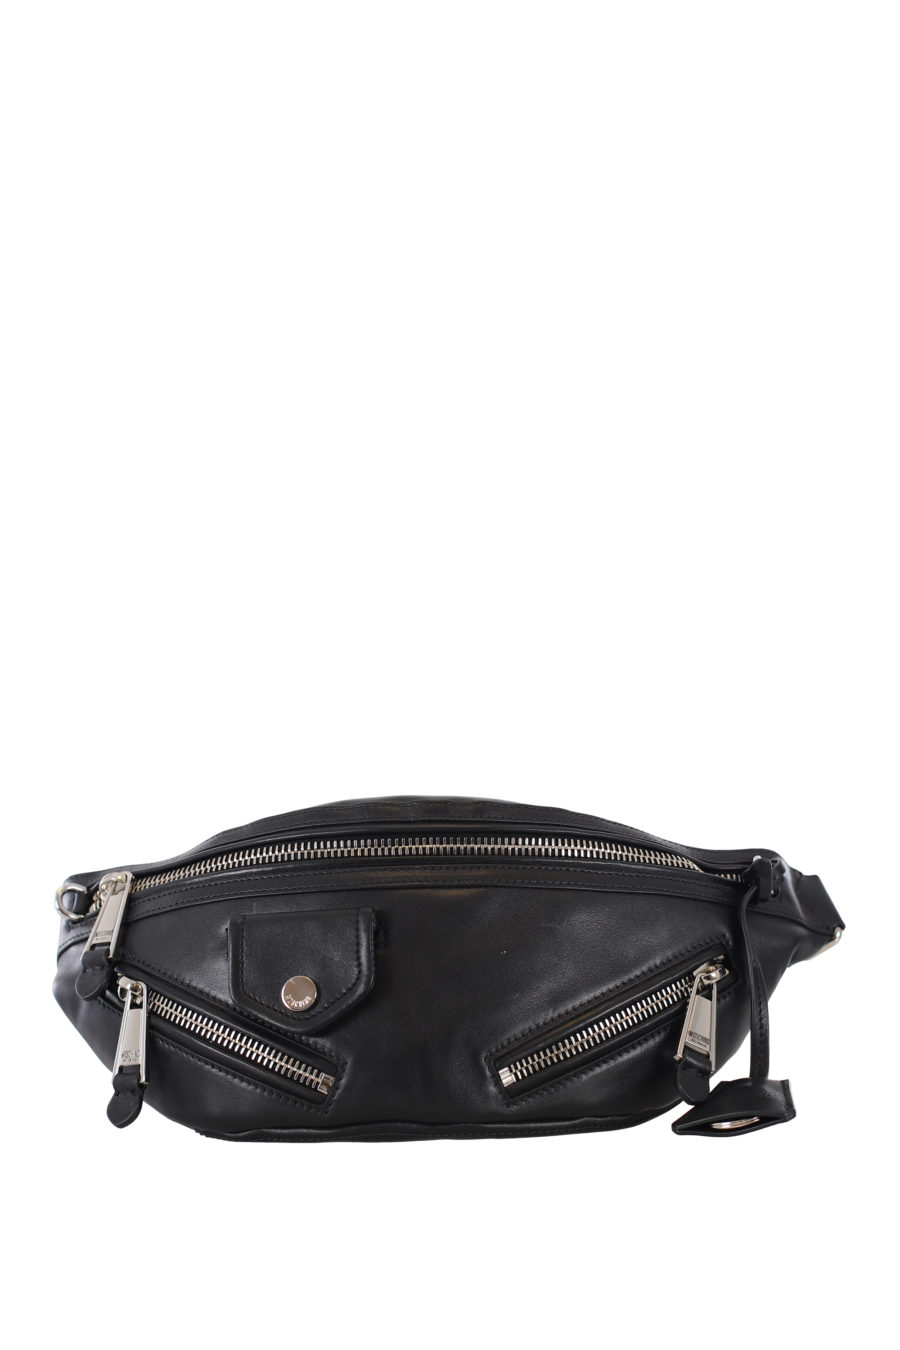 Black biker bum bag in calfskin - IMG 9368